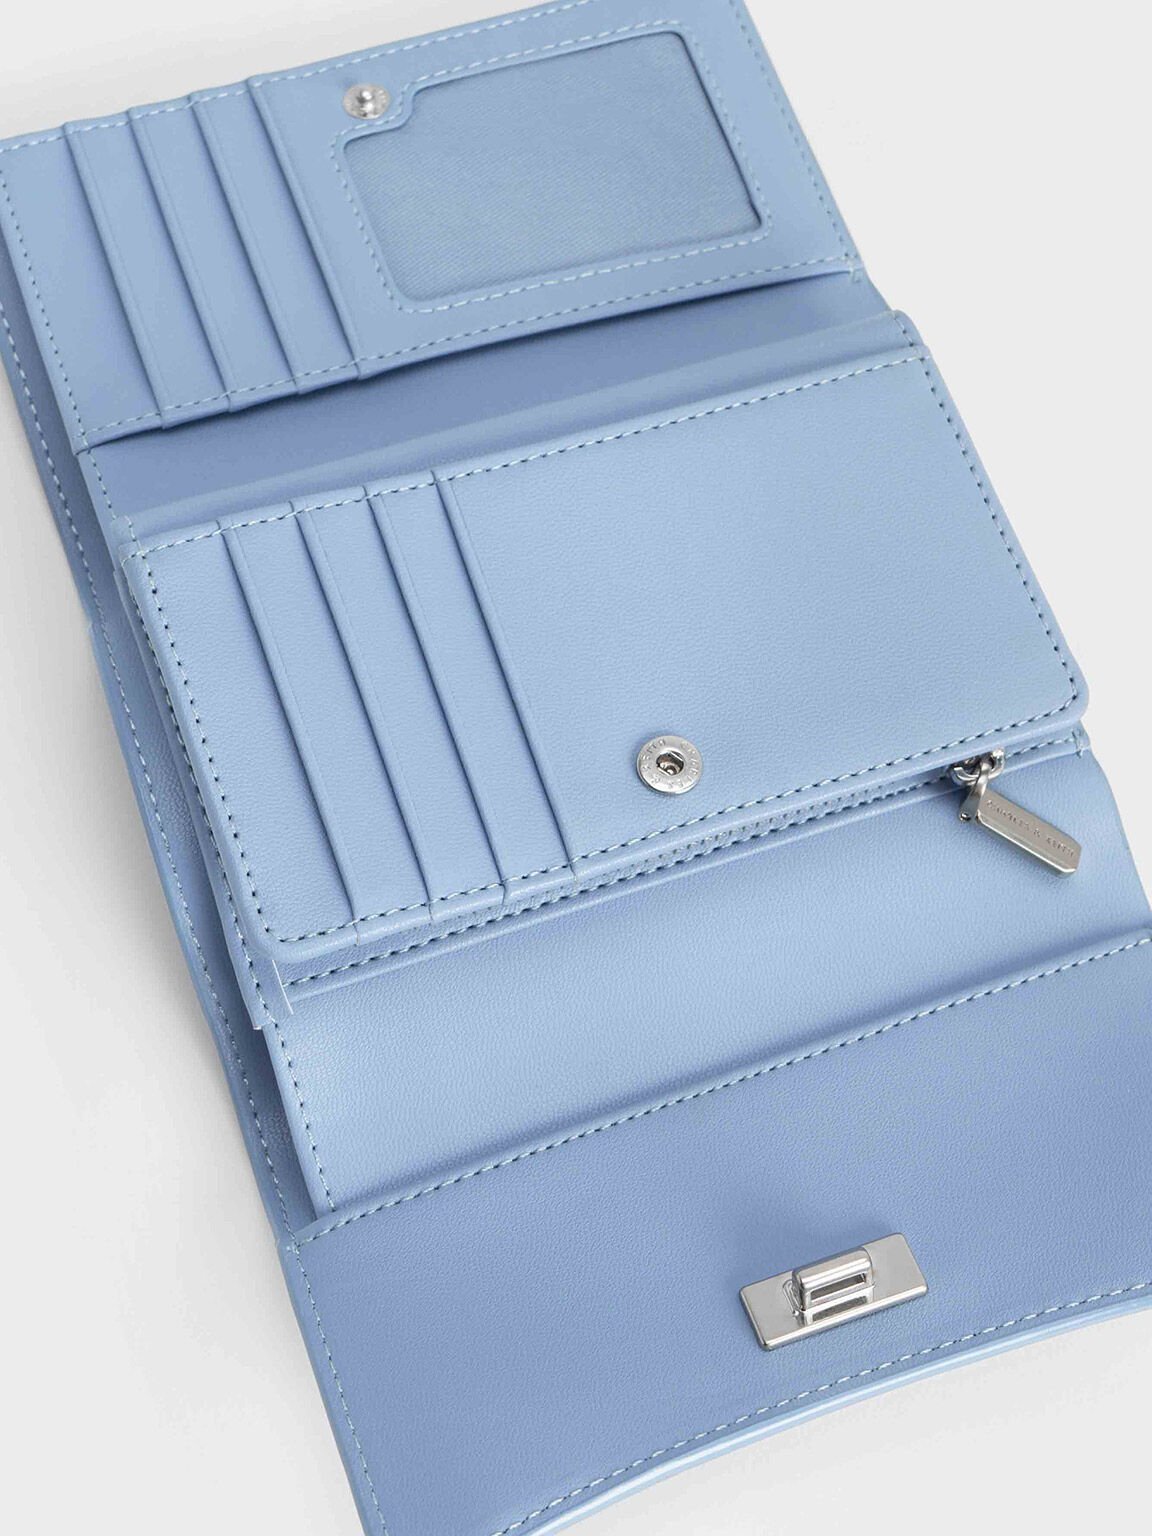 Huxley Metallic Accent Front Flap Wallet, Light Blue, hi-res